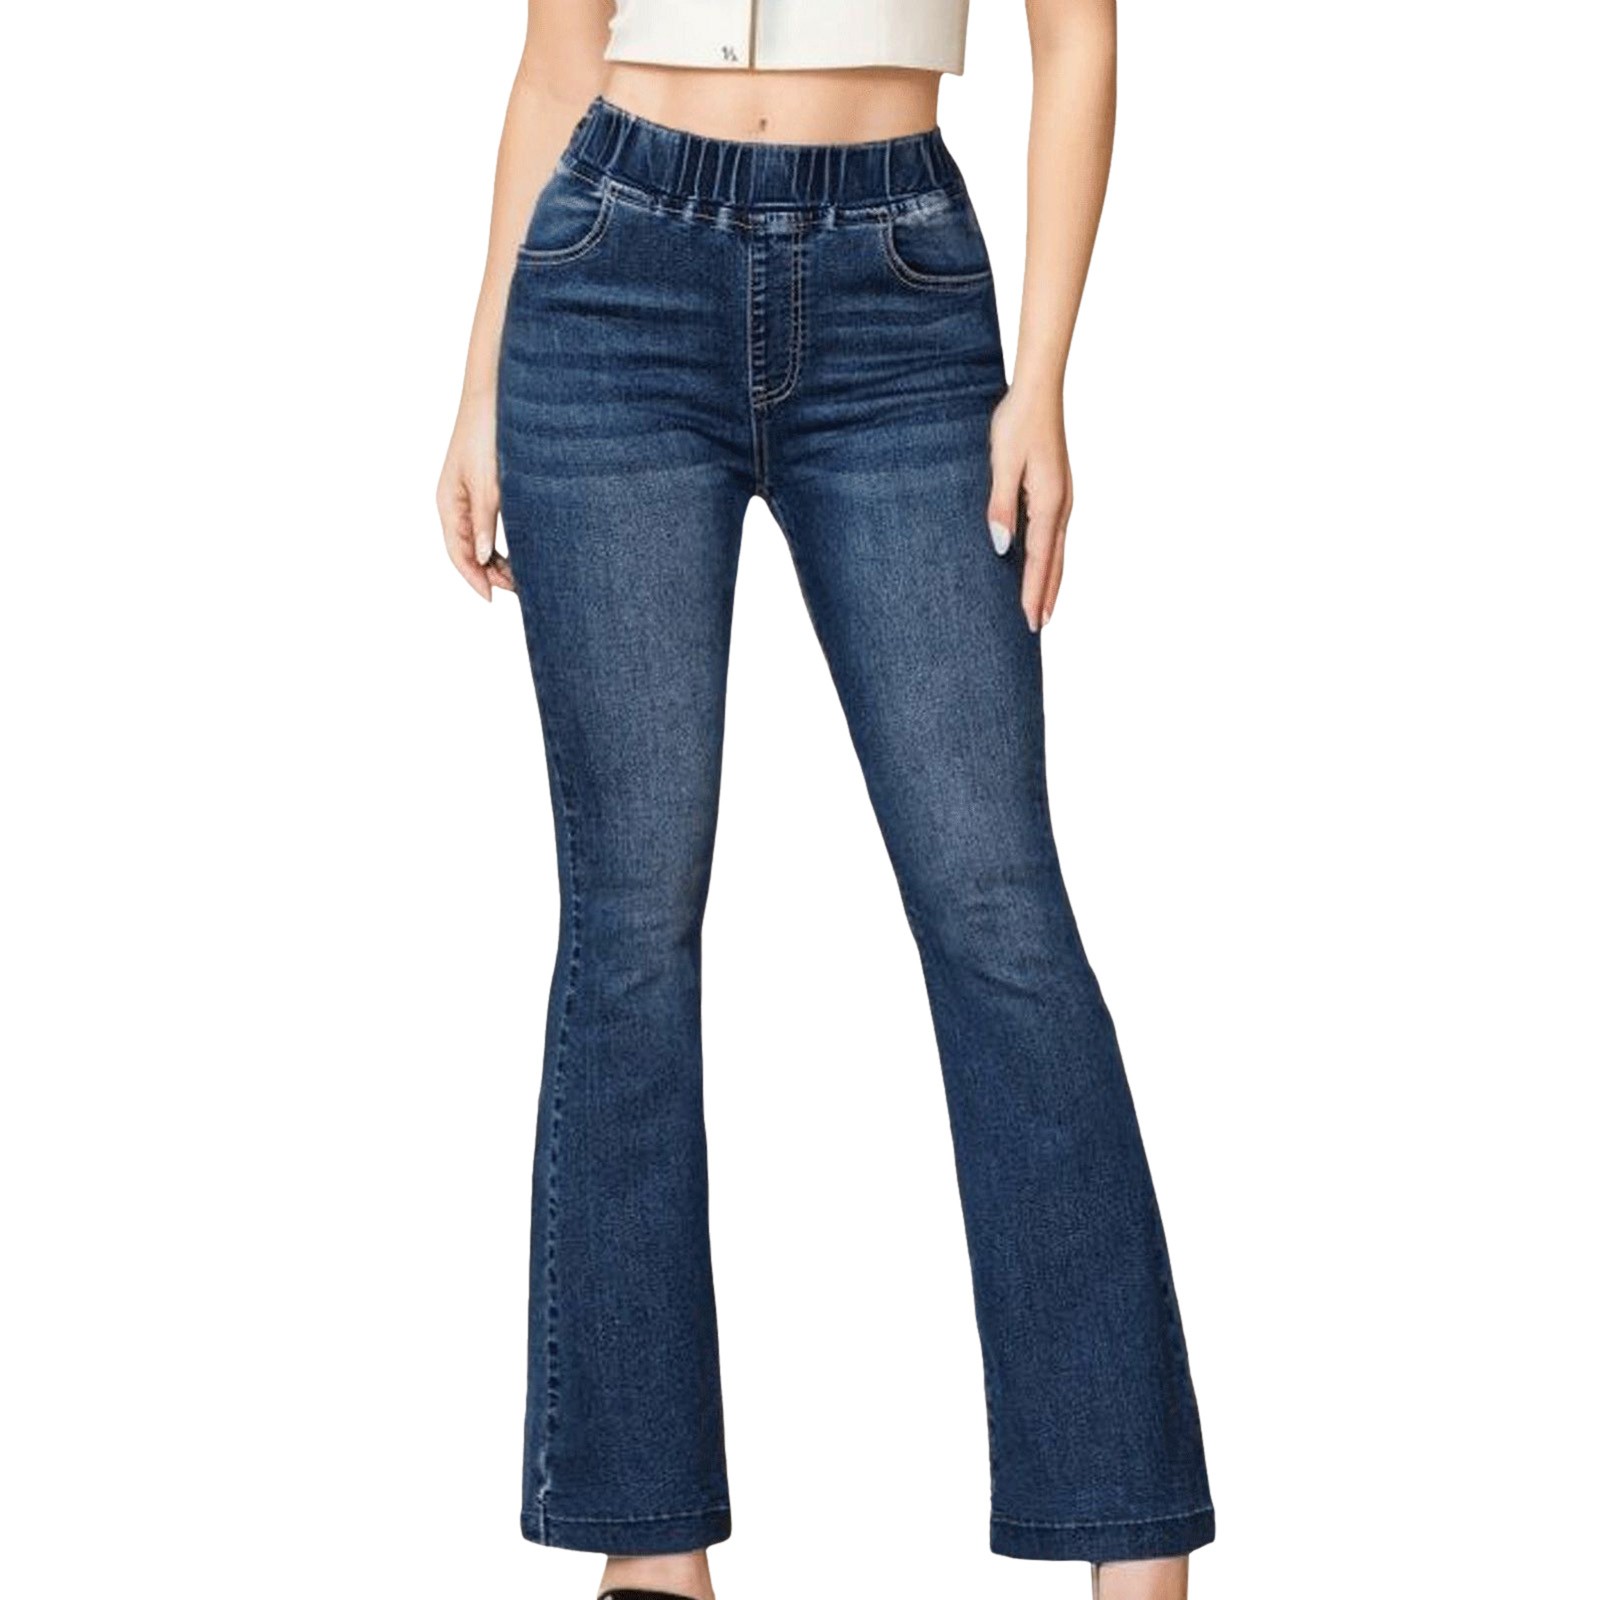 Women's Pants Casual Petite Elastic Waist High Elastic Jeans Slim Fit ...